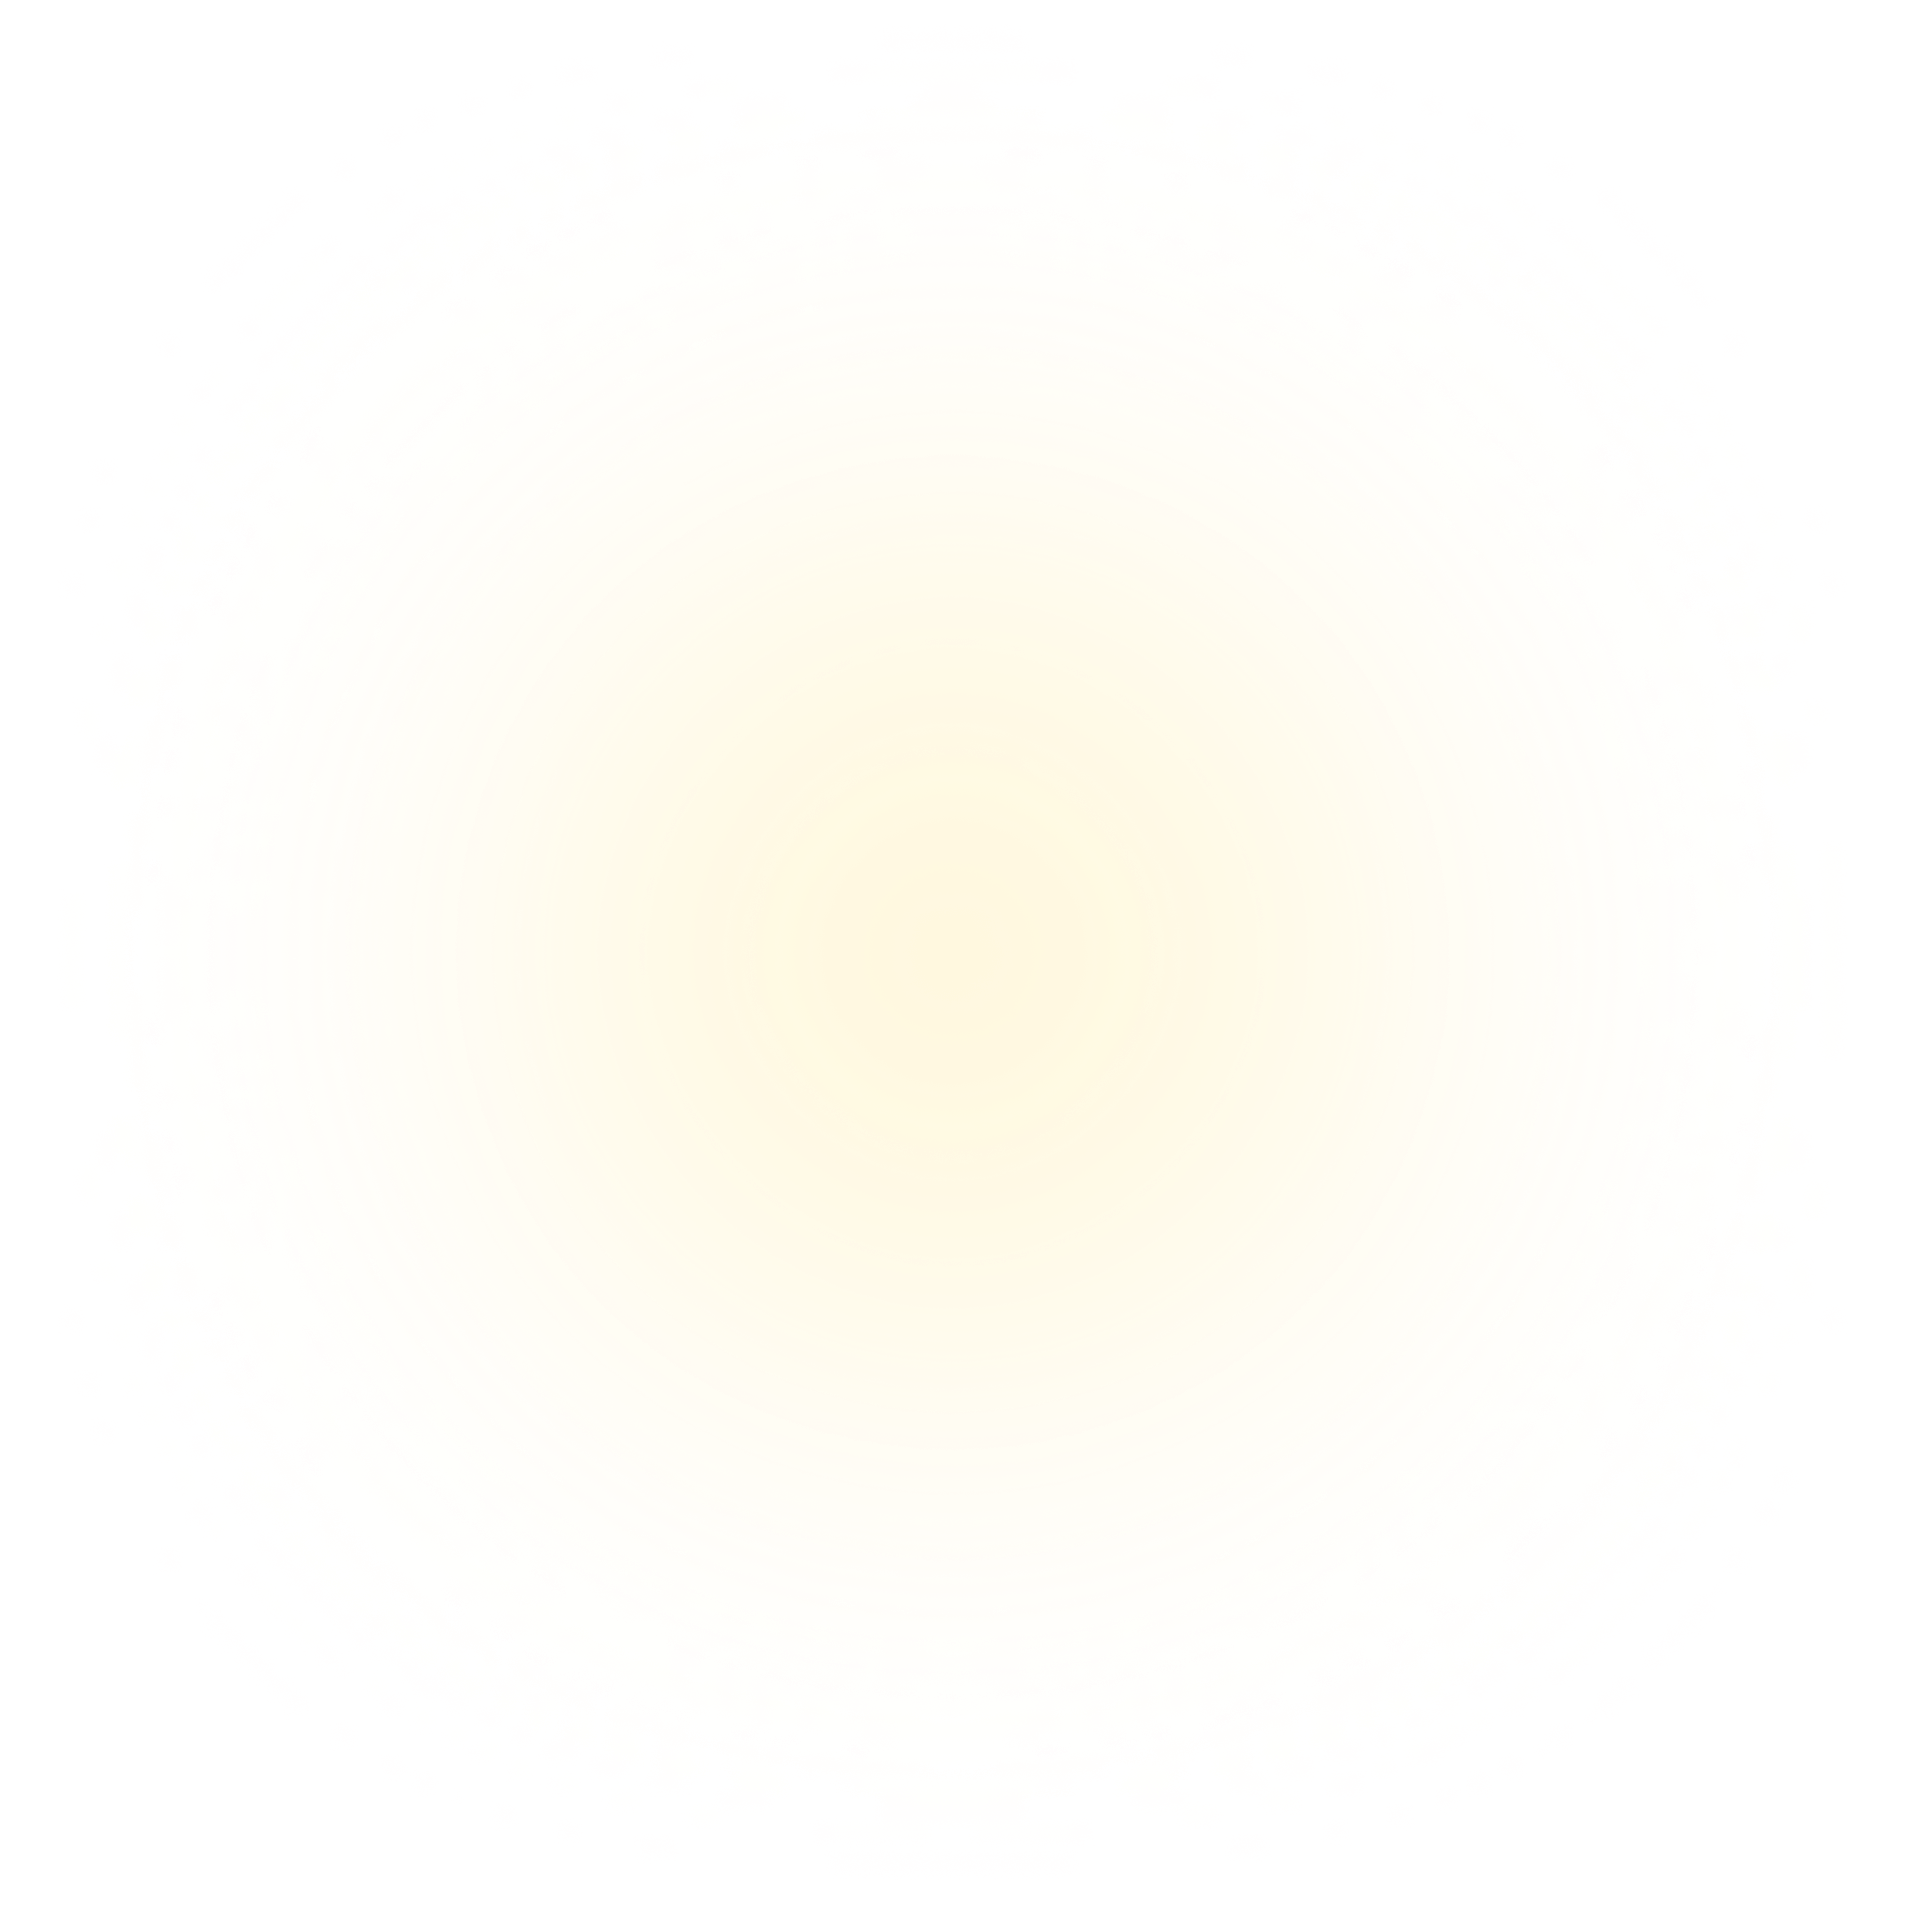 Blurred yellow circle